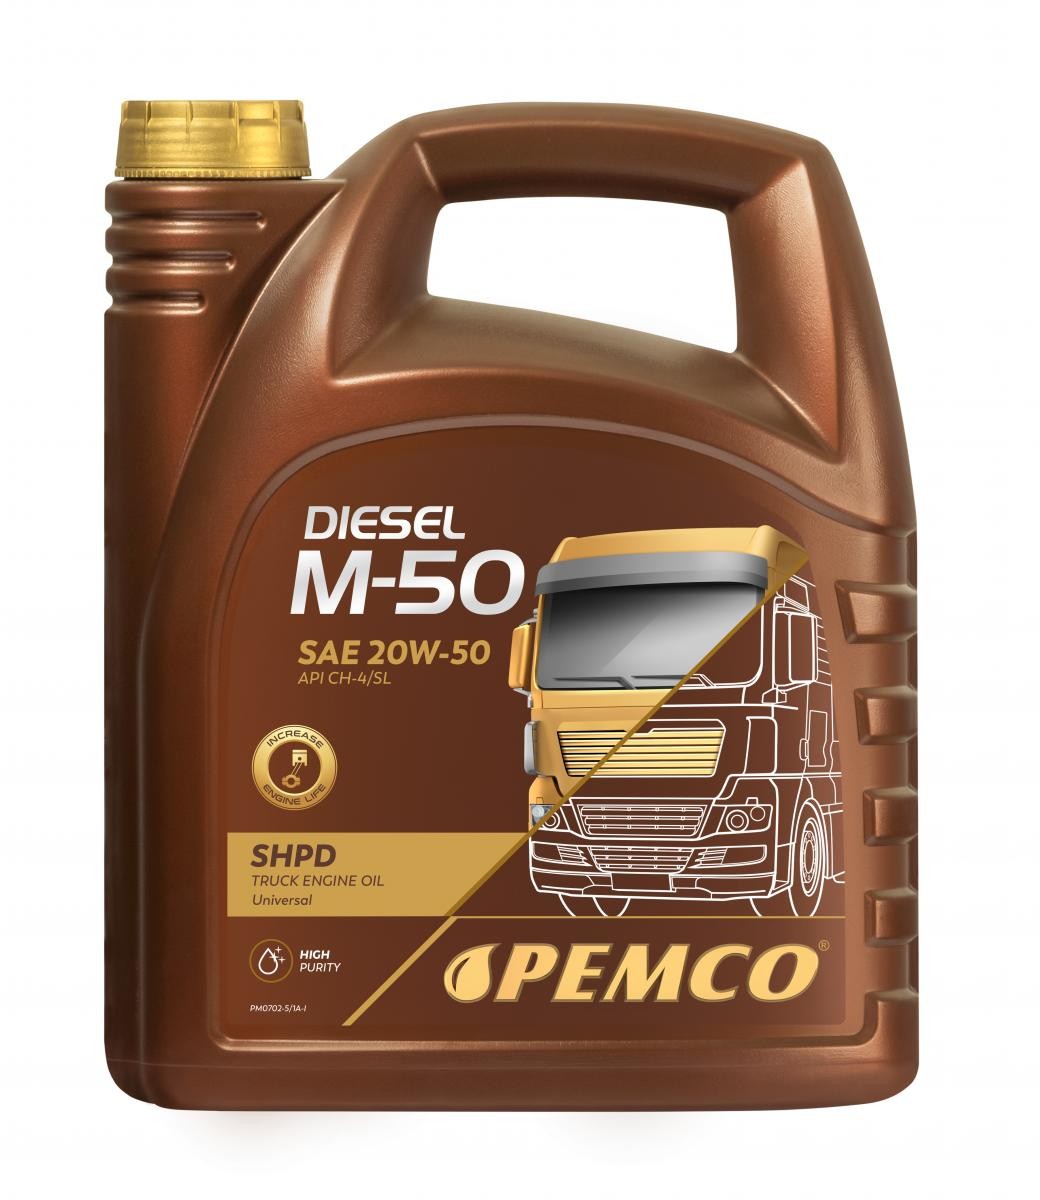 Buy Engine oil PEMCO diesel PM0702-5 Truck SHPD, DIESEL M-50 SHPD 20W-50, 5l, Mineral Oil